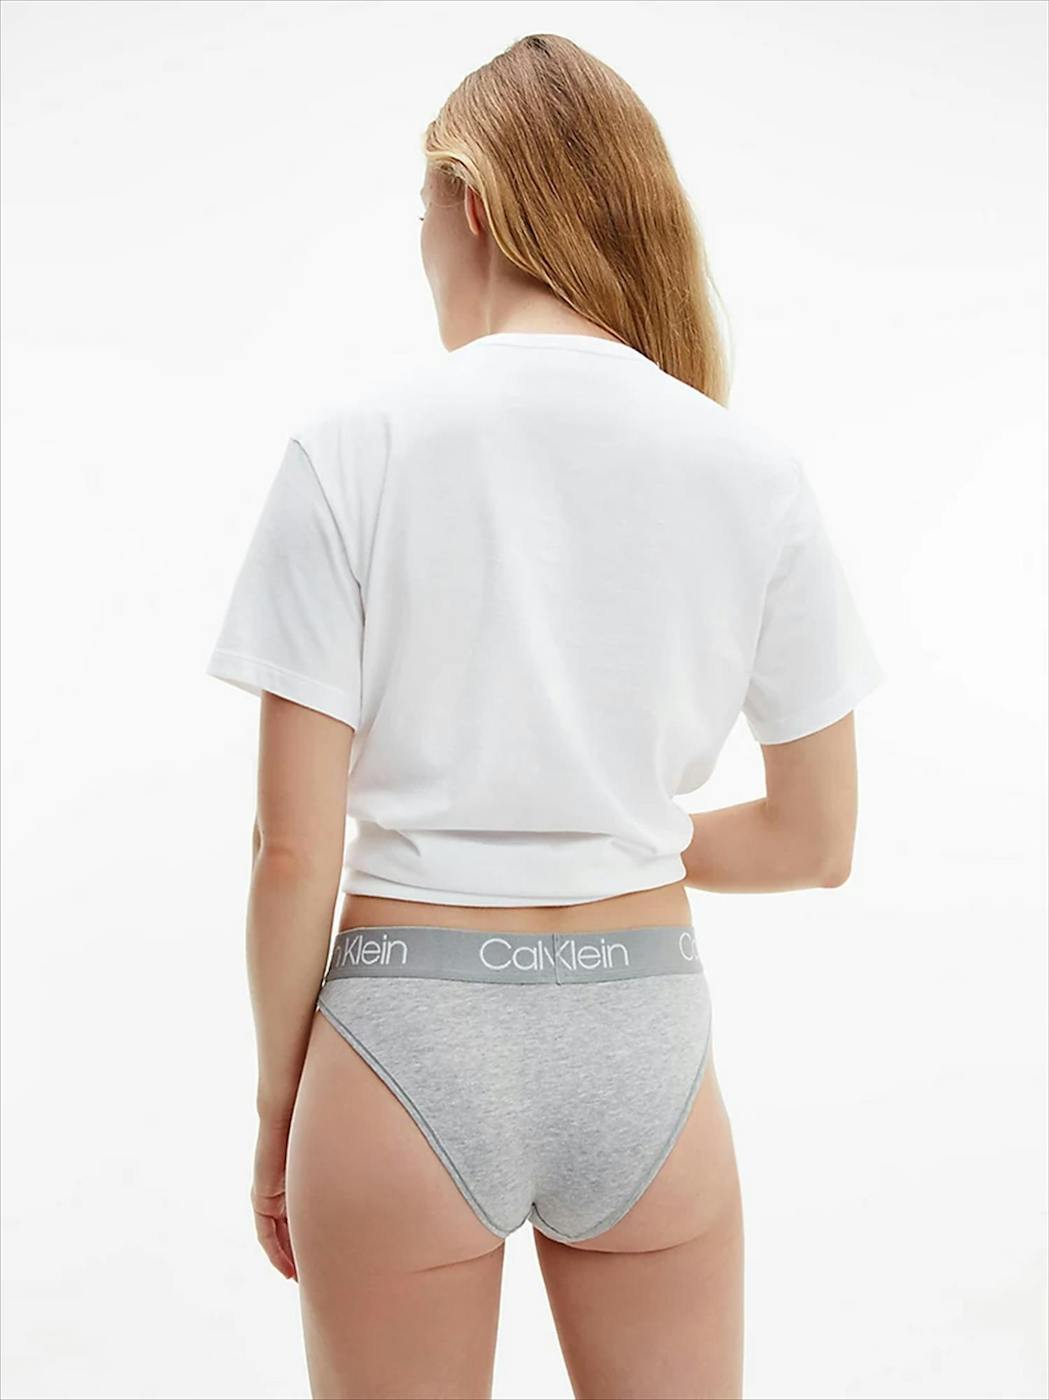 Calvin Klein Underwear - Zwart-grijs-witte 3-pack High Leg Tanga slips